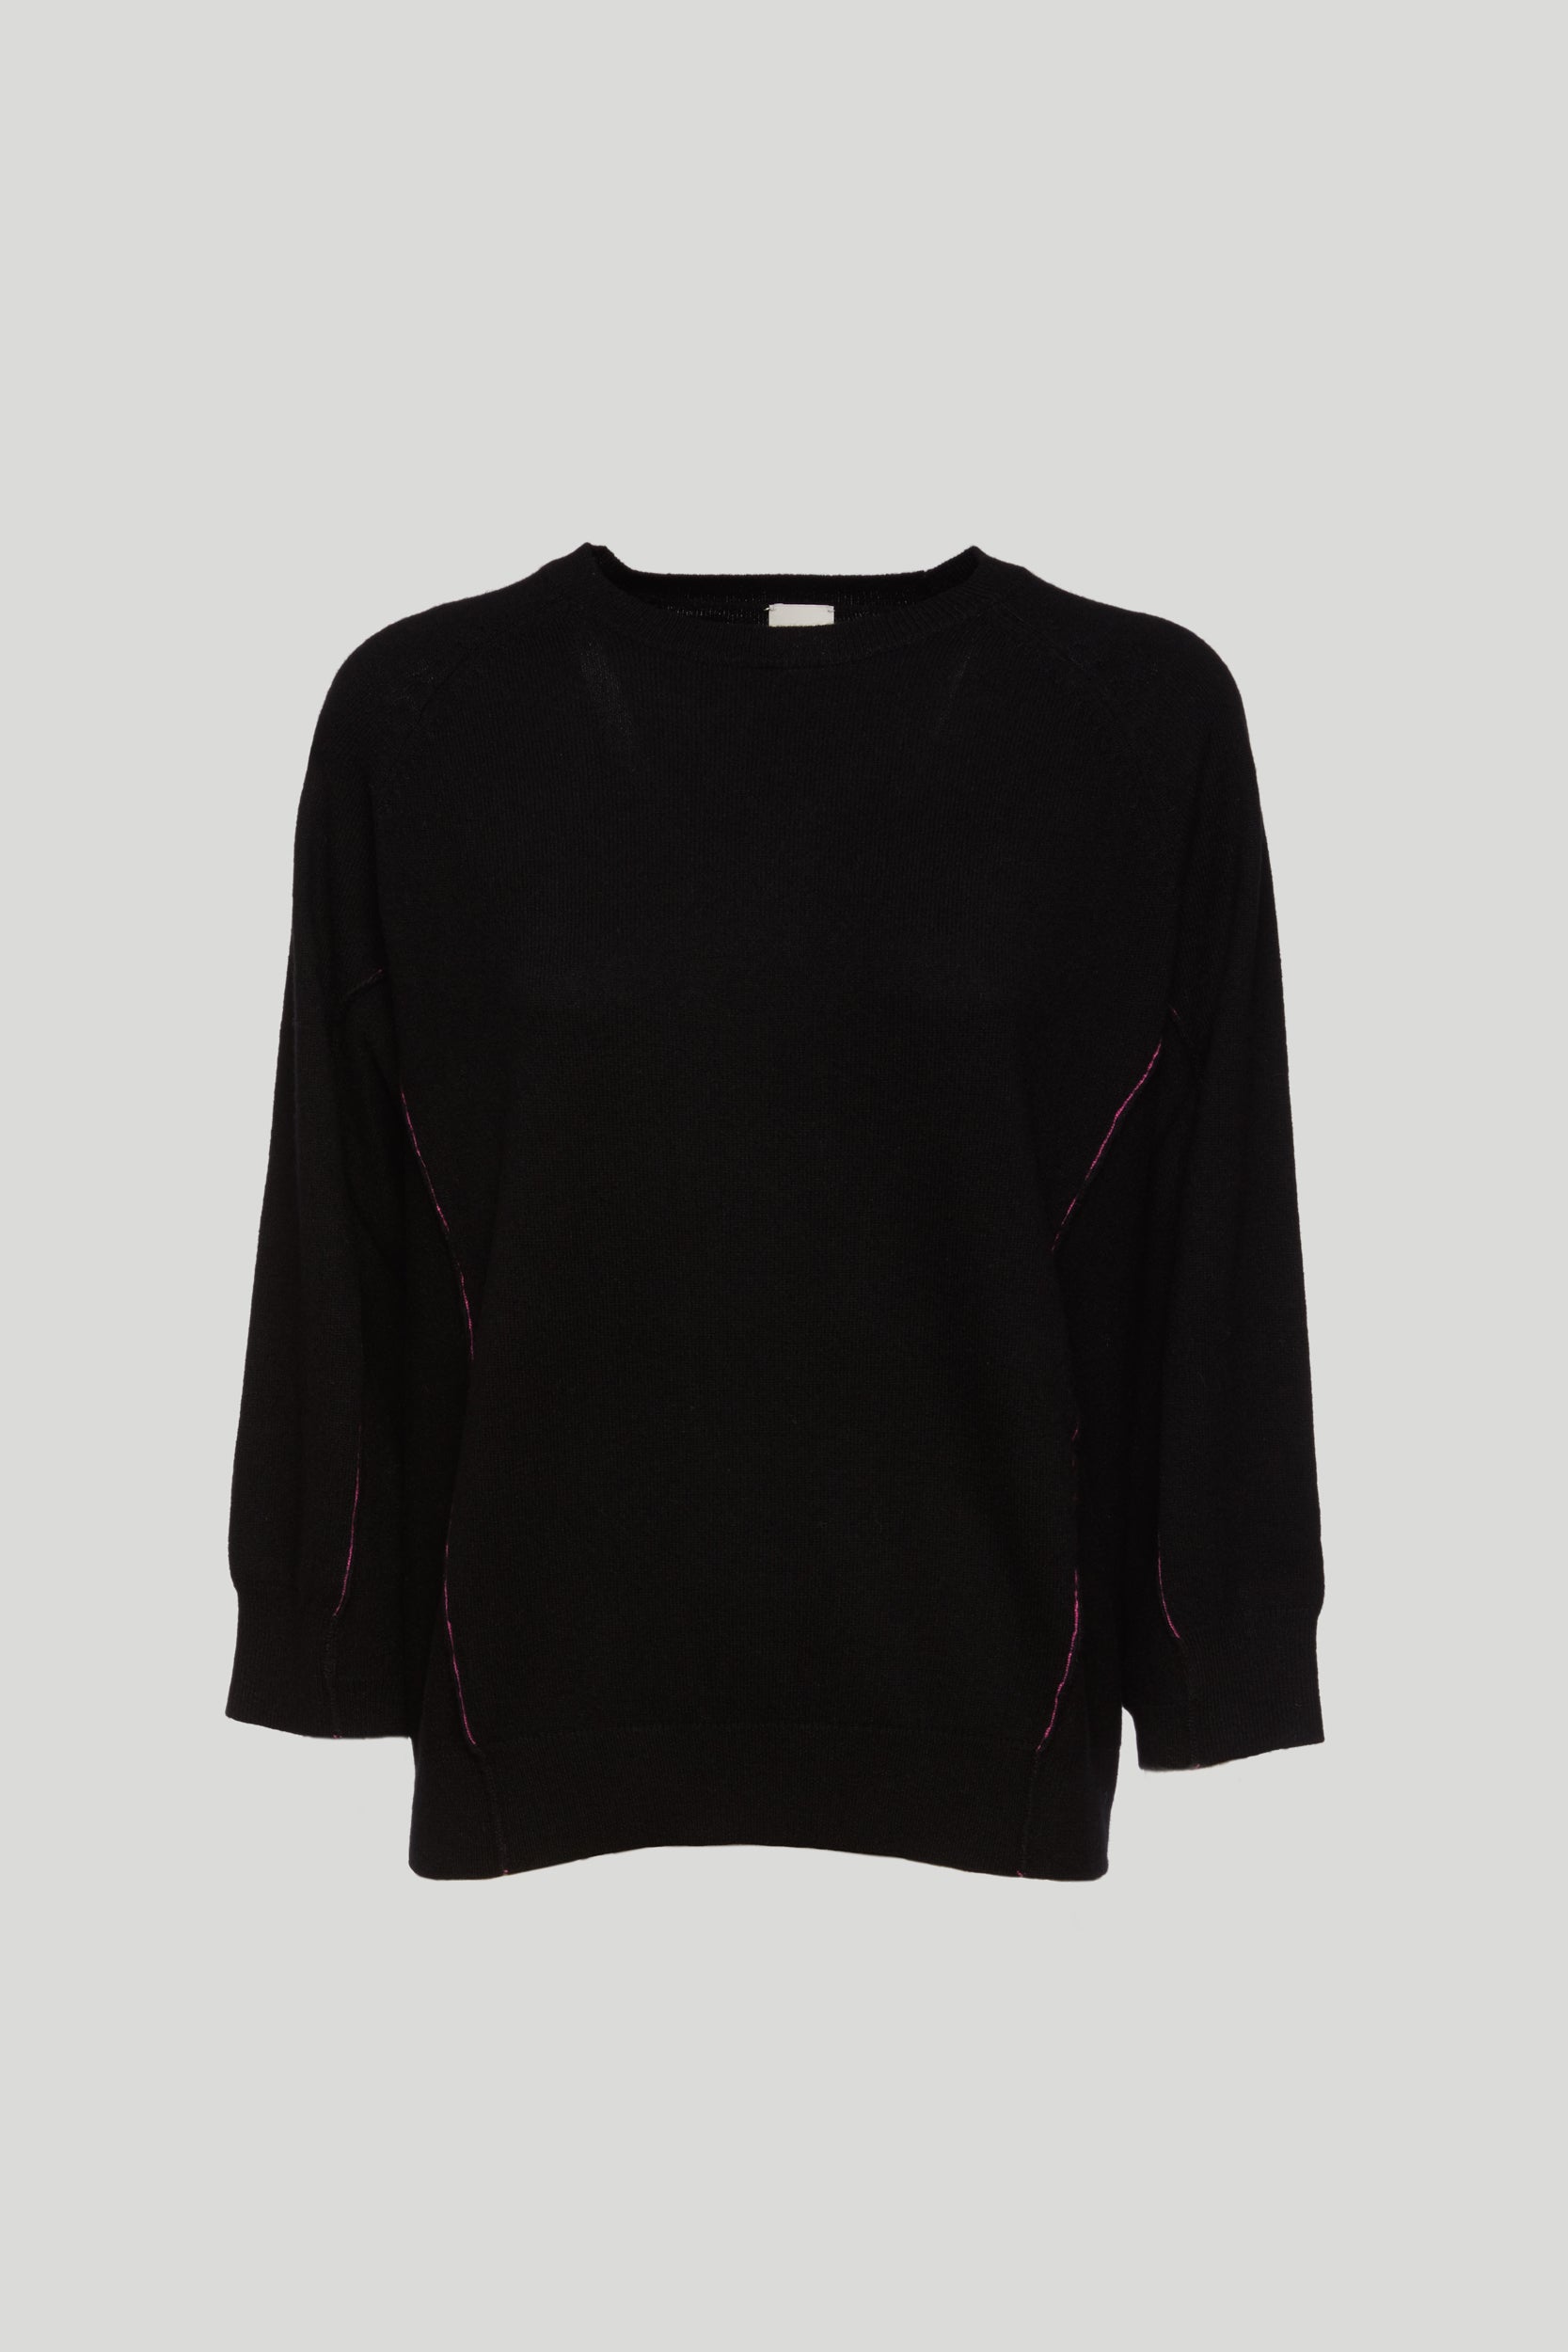 PINKO Black Cashmere Sweater